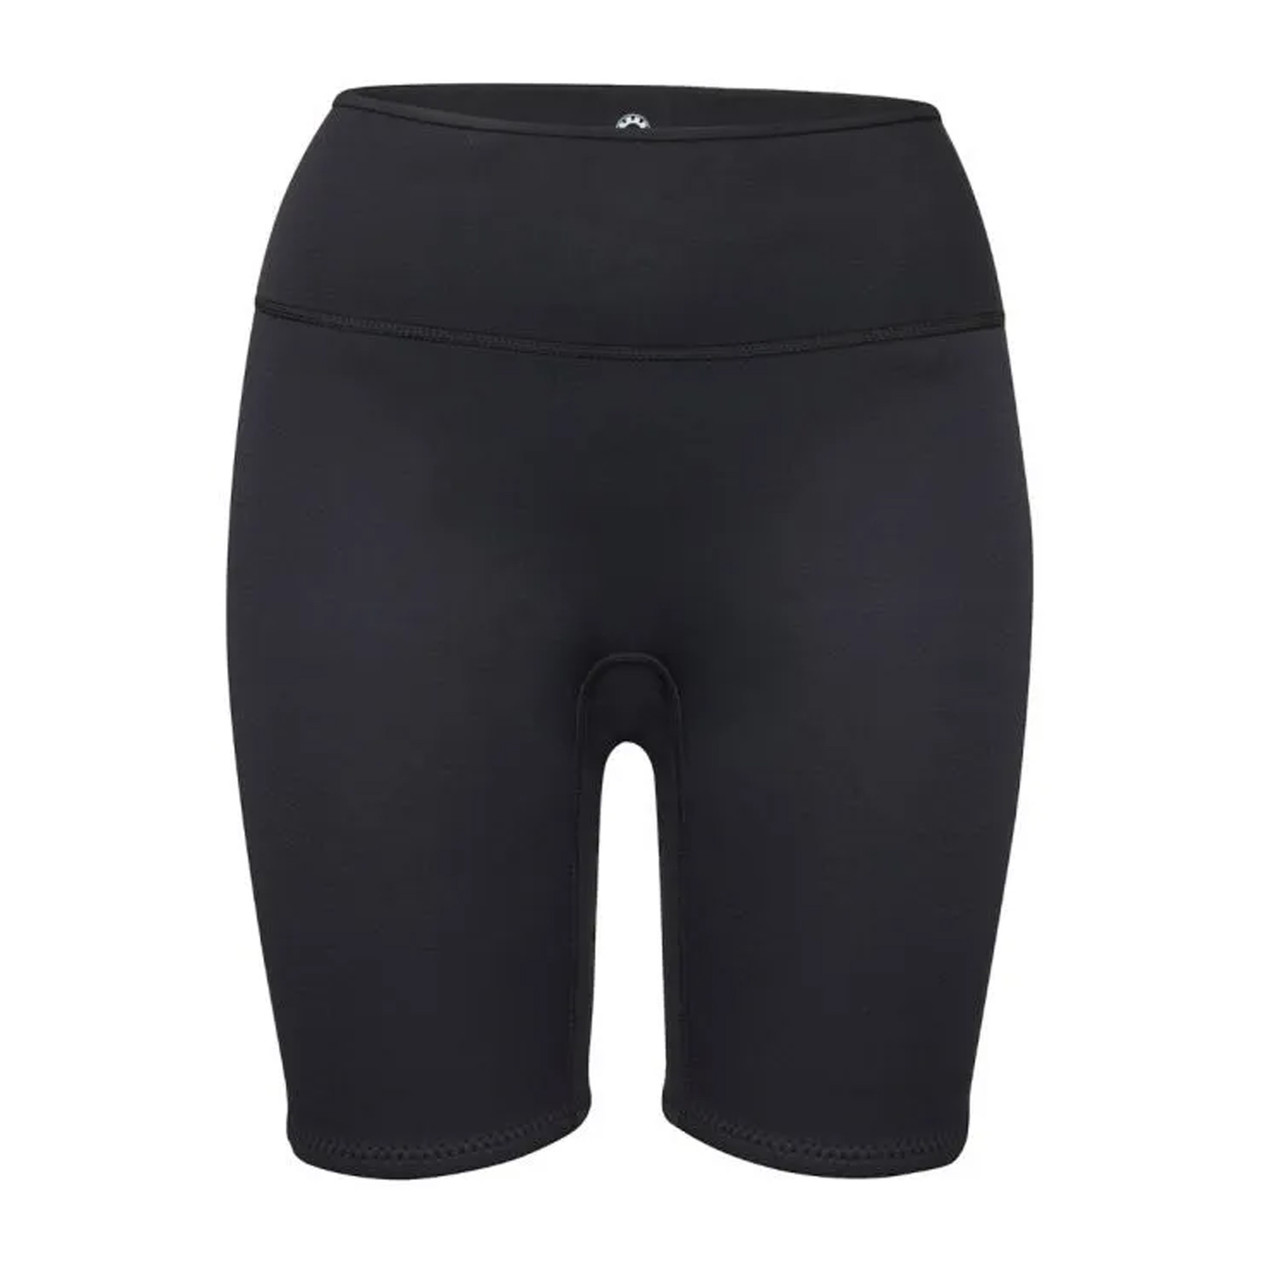 Sea-Doo New OEM, Women's Large Protective Nylon Neoprene Shorts 2867860990